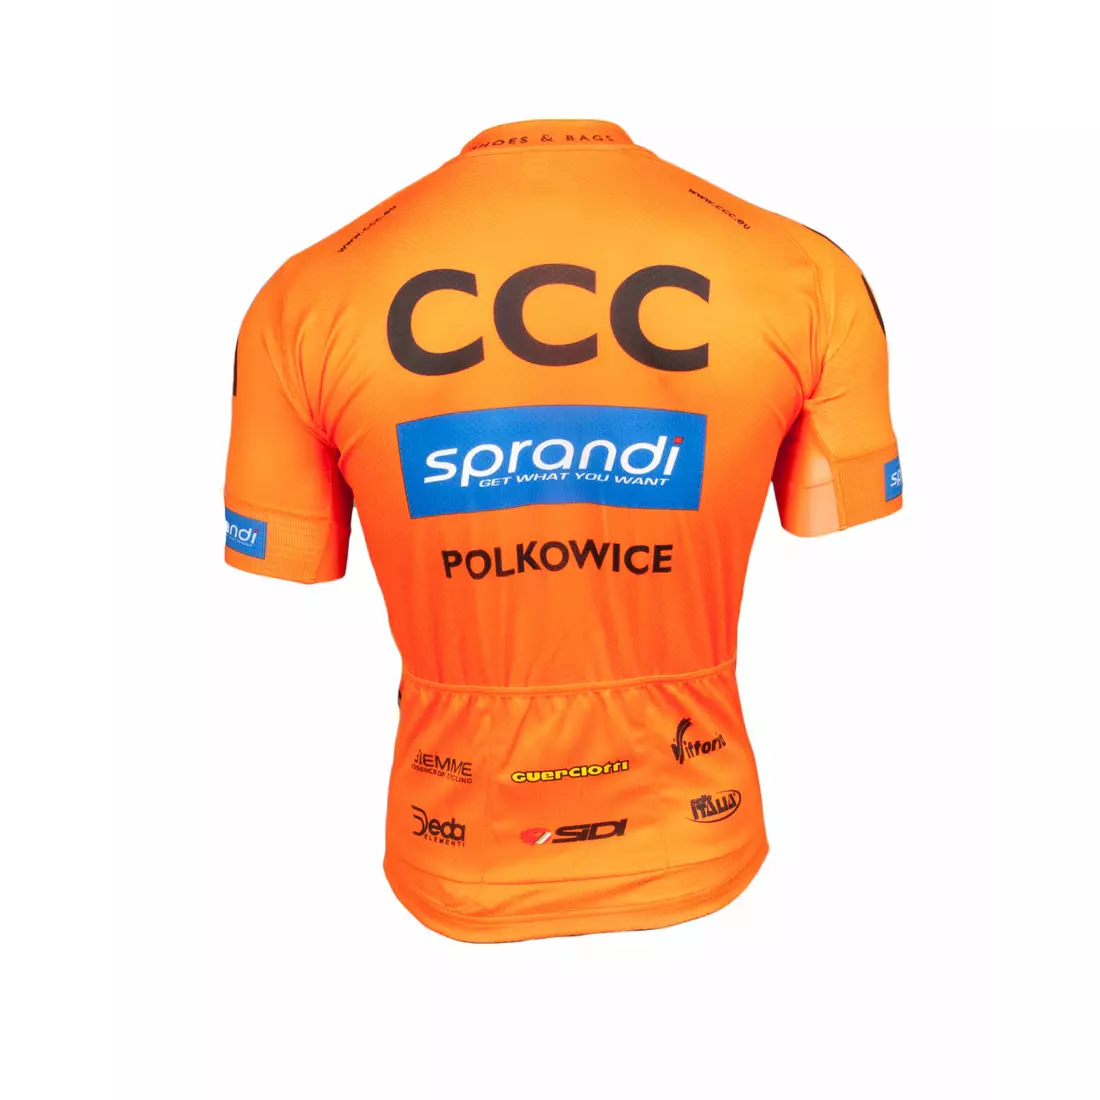 BIEMME CCC SPRANDI POLKOWICE Racing Team 2017 PRO men's cycling jersey